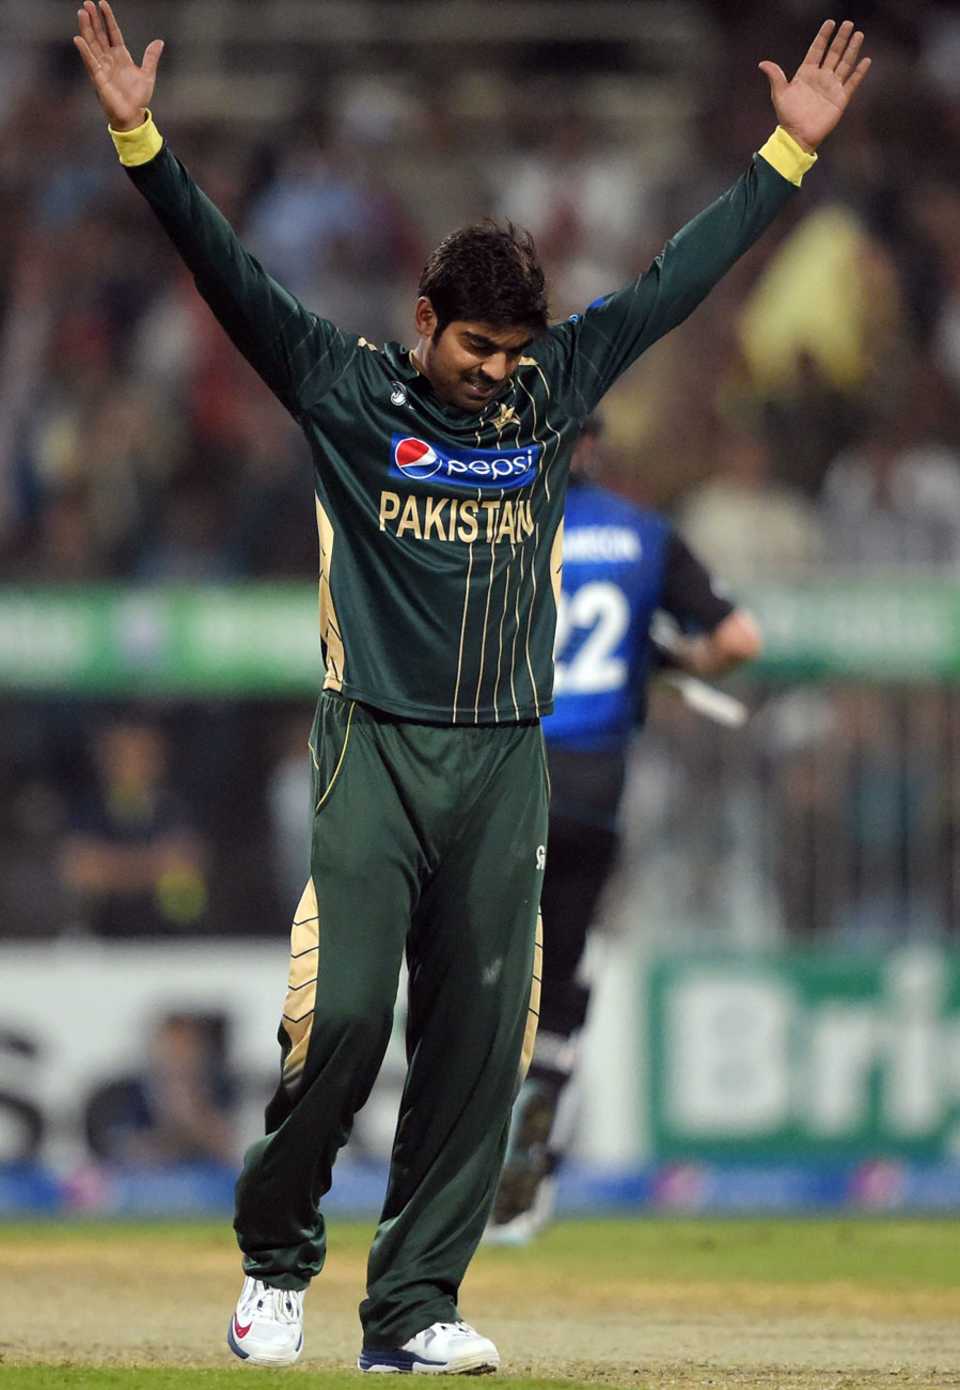 Haris Sohail exults after a wicket, Pakistan v New Zealand, 2nd ODI, Sharjah, December 12, 2014